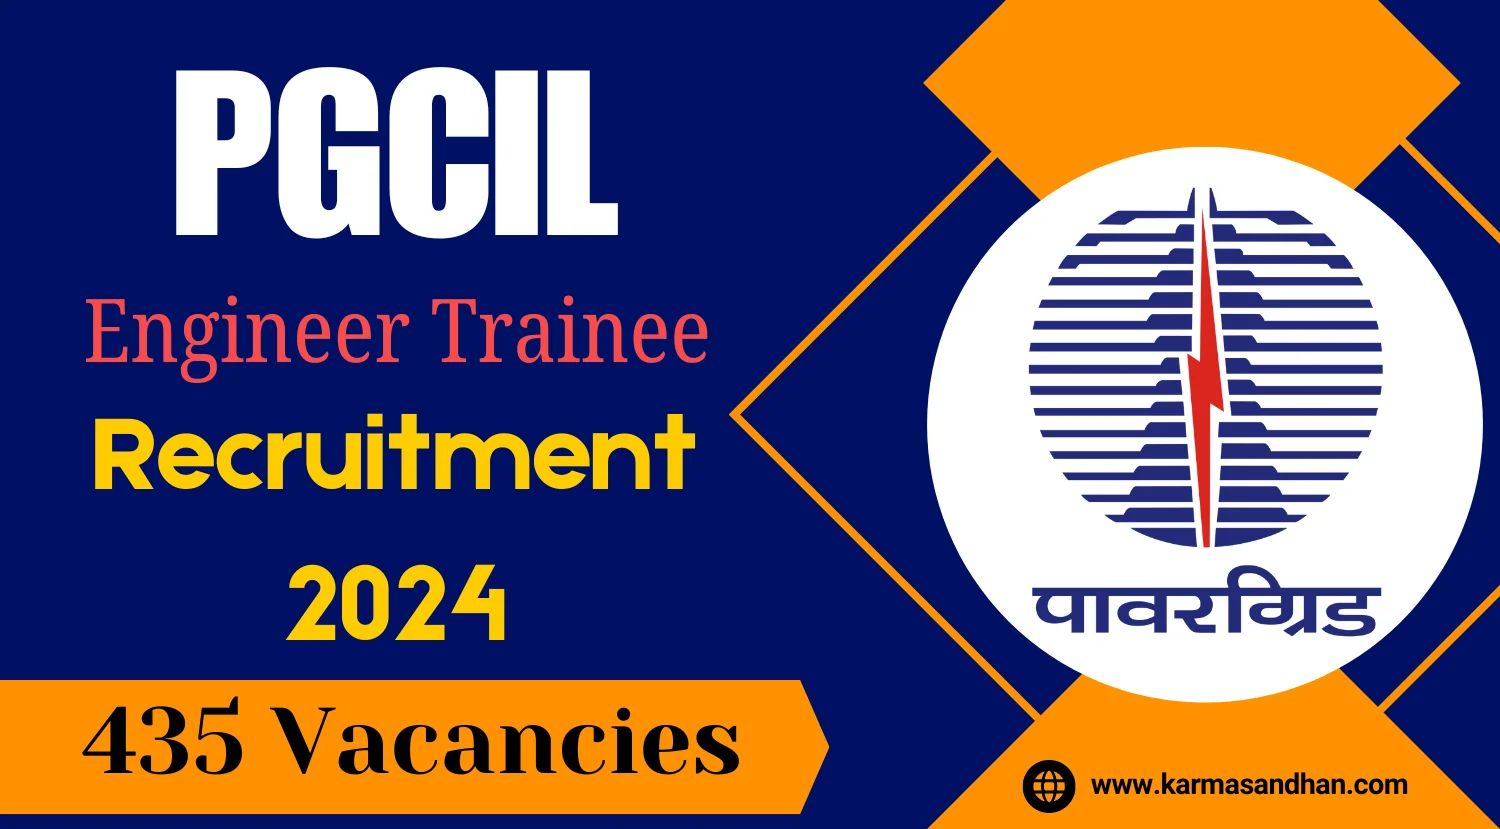 PGCIL Engineer Trainee Recruitment 2024